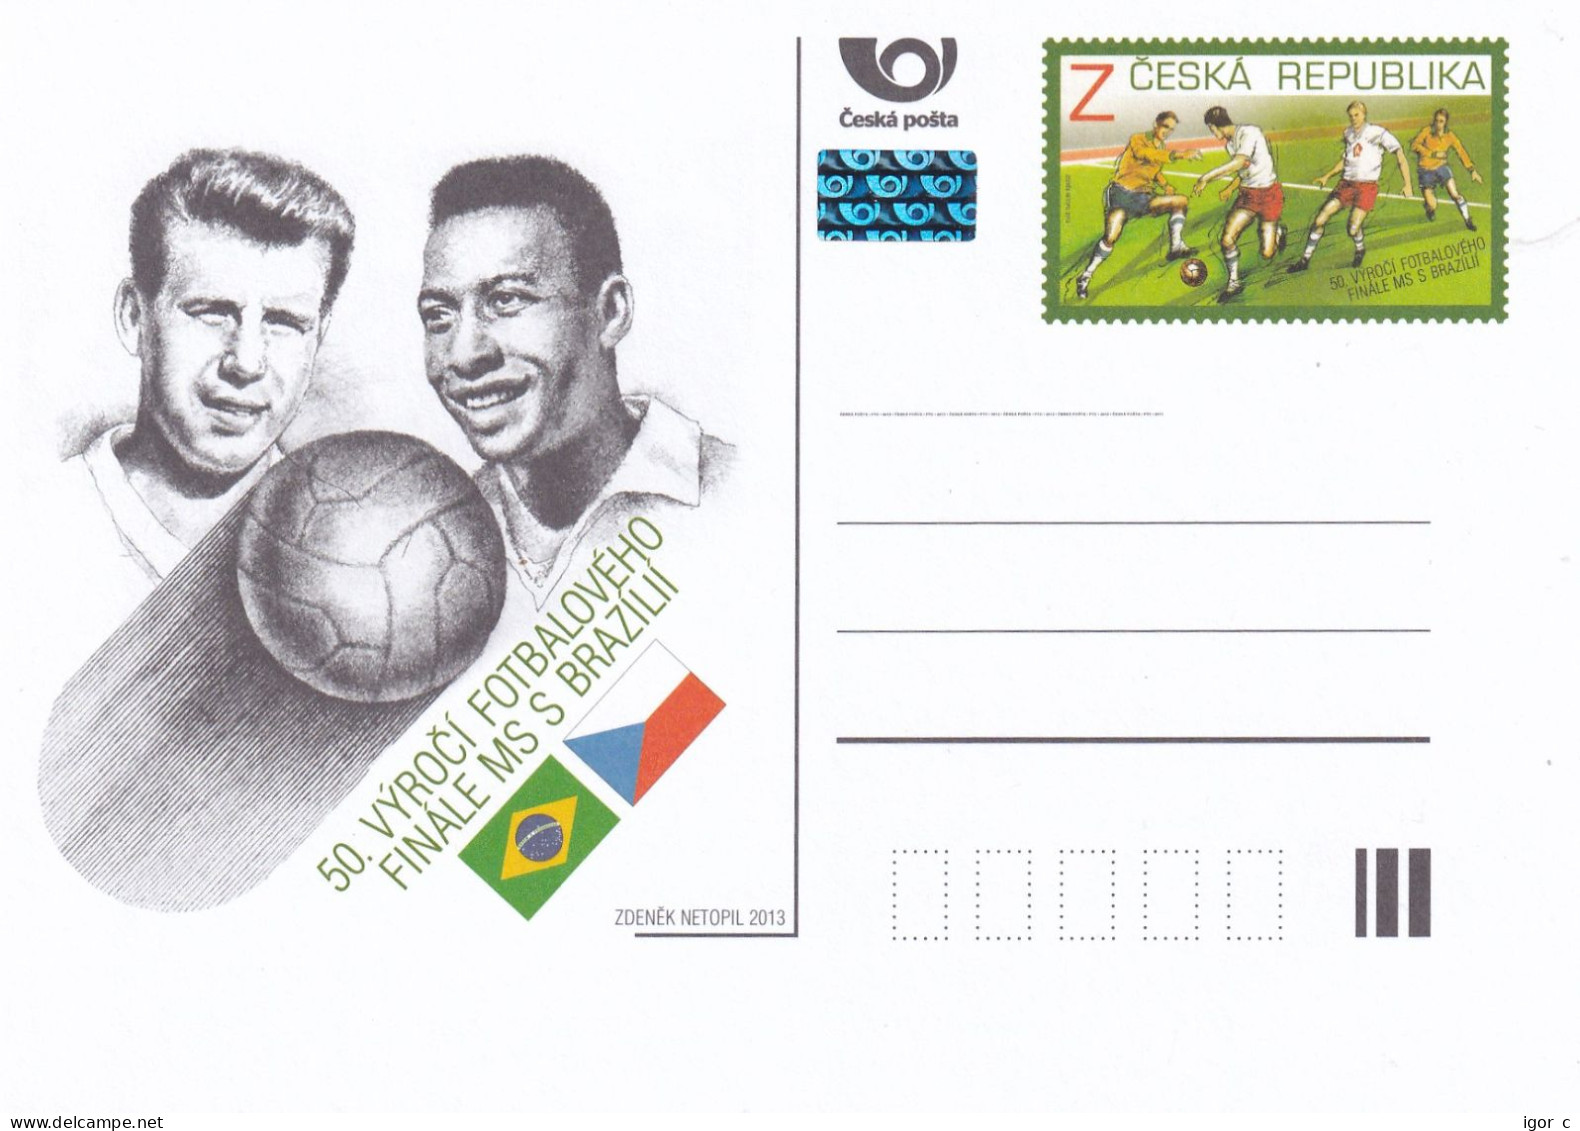 Czech Republic PS Card 2013: Football Fussball Soccer Calcio; FIFA World Cup Chille Chile Final Czechoslobvakia - Brazil - 1962 – Chili